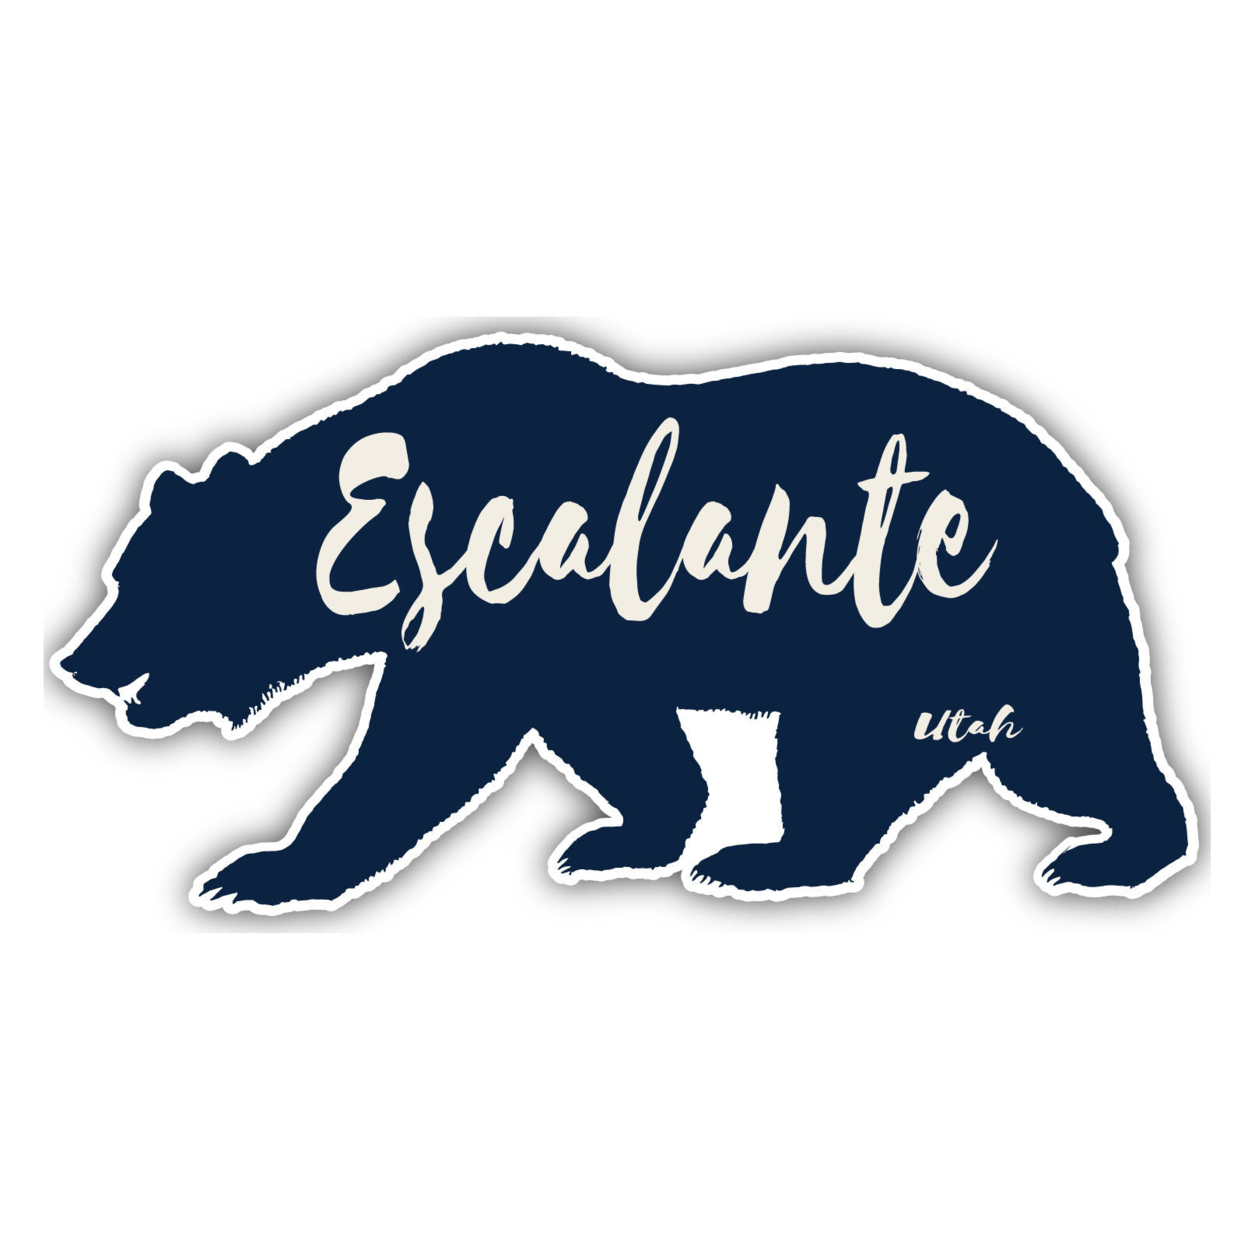 Escalante Utah Souvenir Decorative Stickers (Choose Theme And Size) - 4-Pack, 8-Inch, Bear